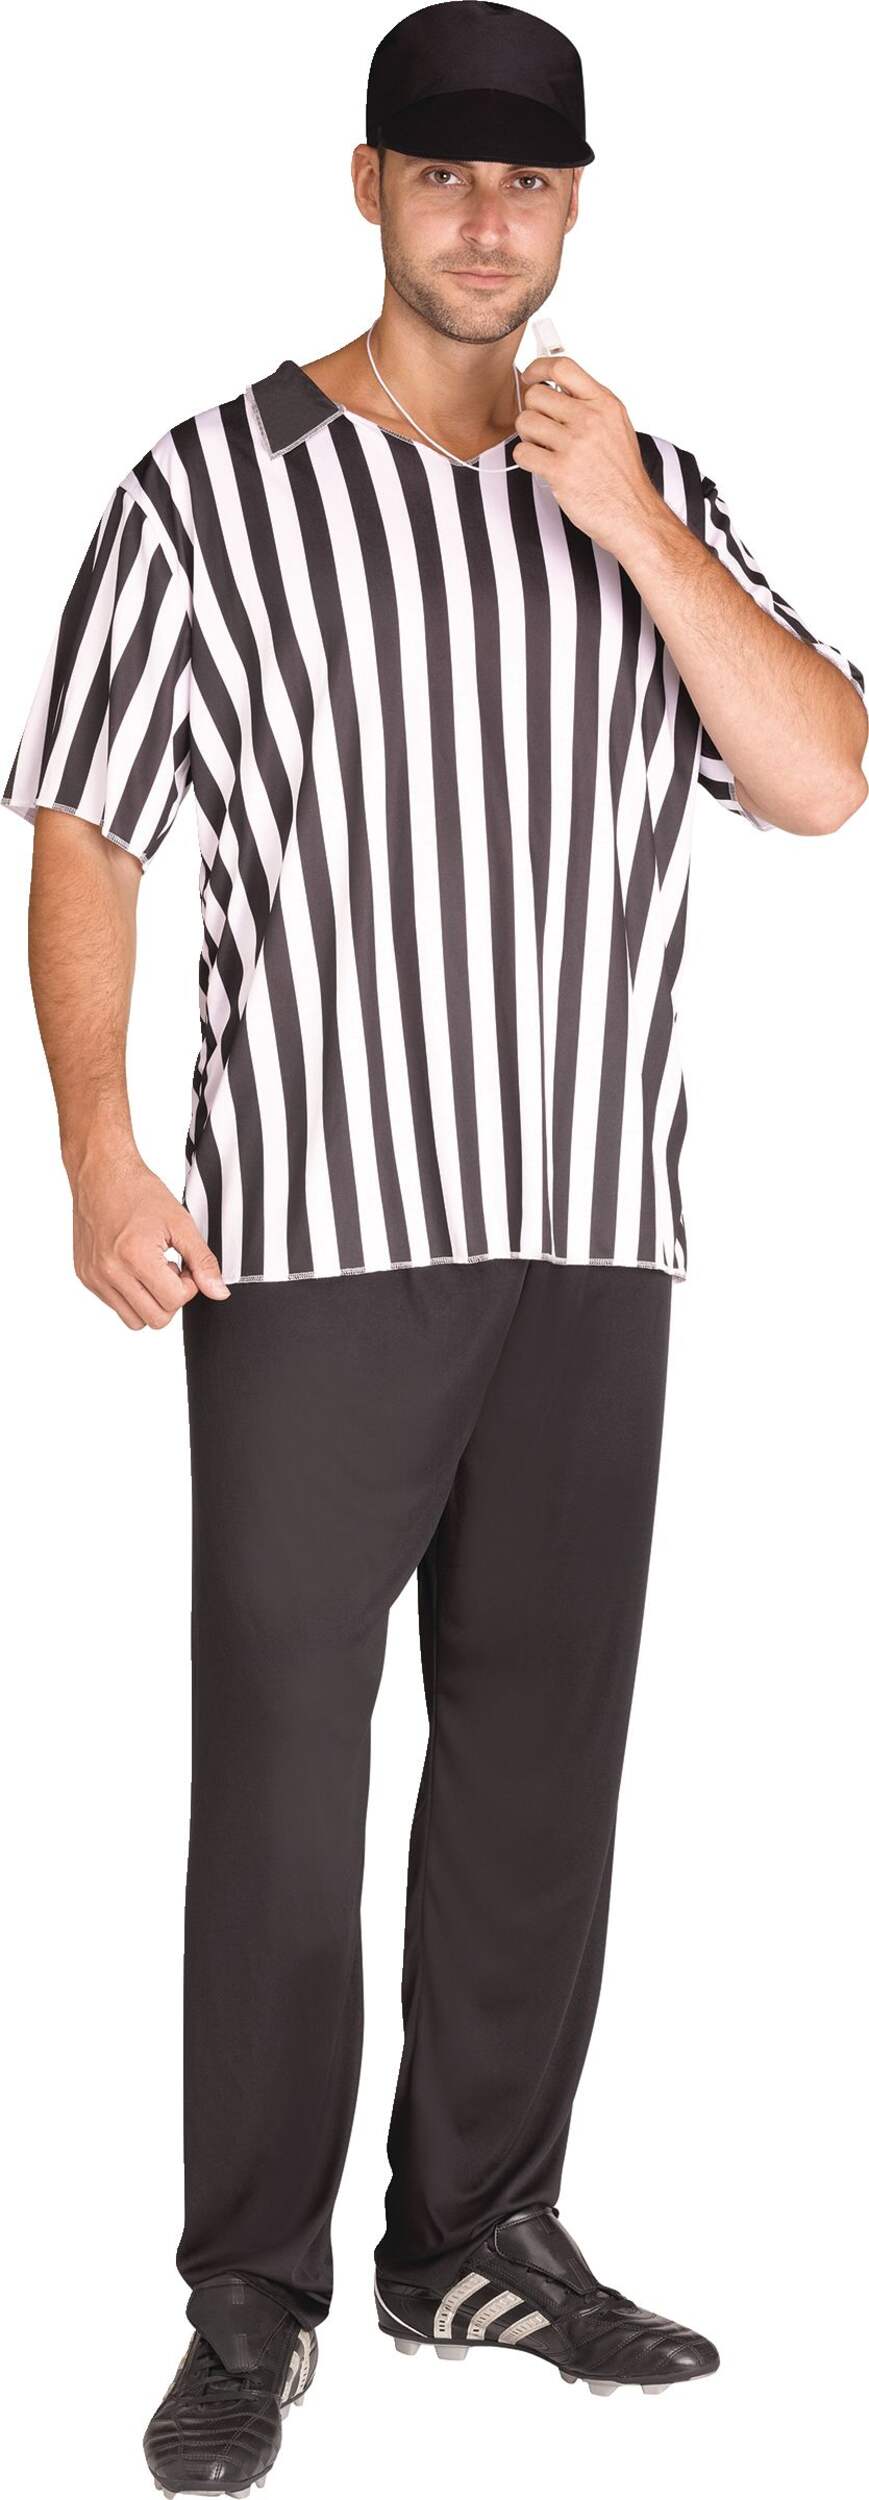 Referee Unisex Halloween Costume Set, Adult, Standard Size | Party City